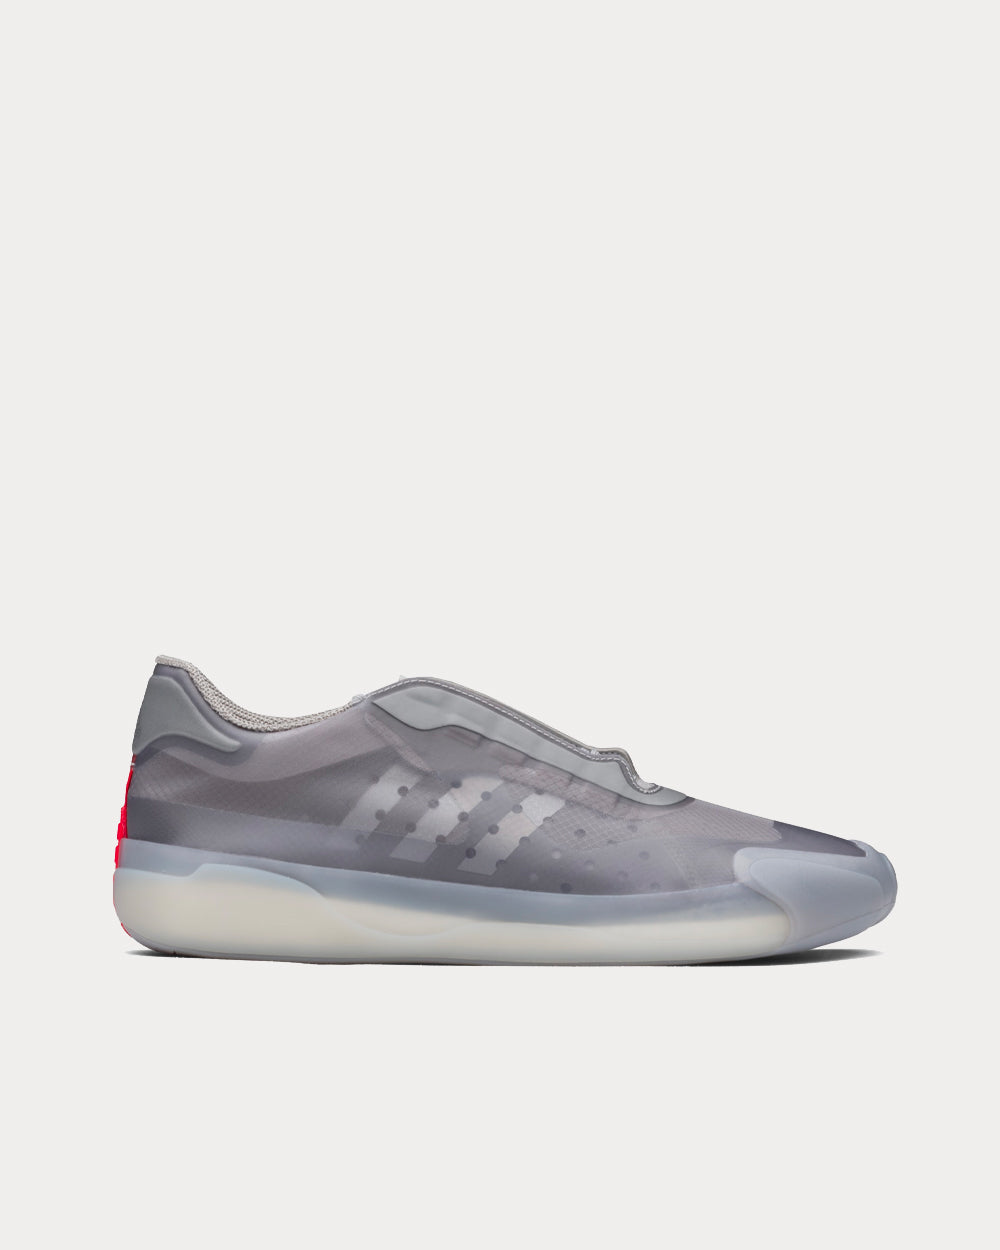 Adidas x Prada - A+P Luna Rossa 21 Grey Low Top Sneakers